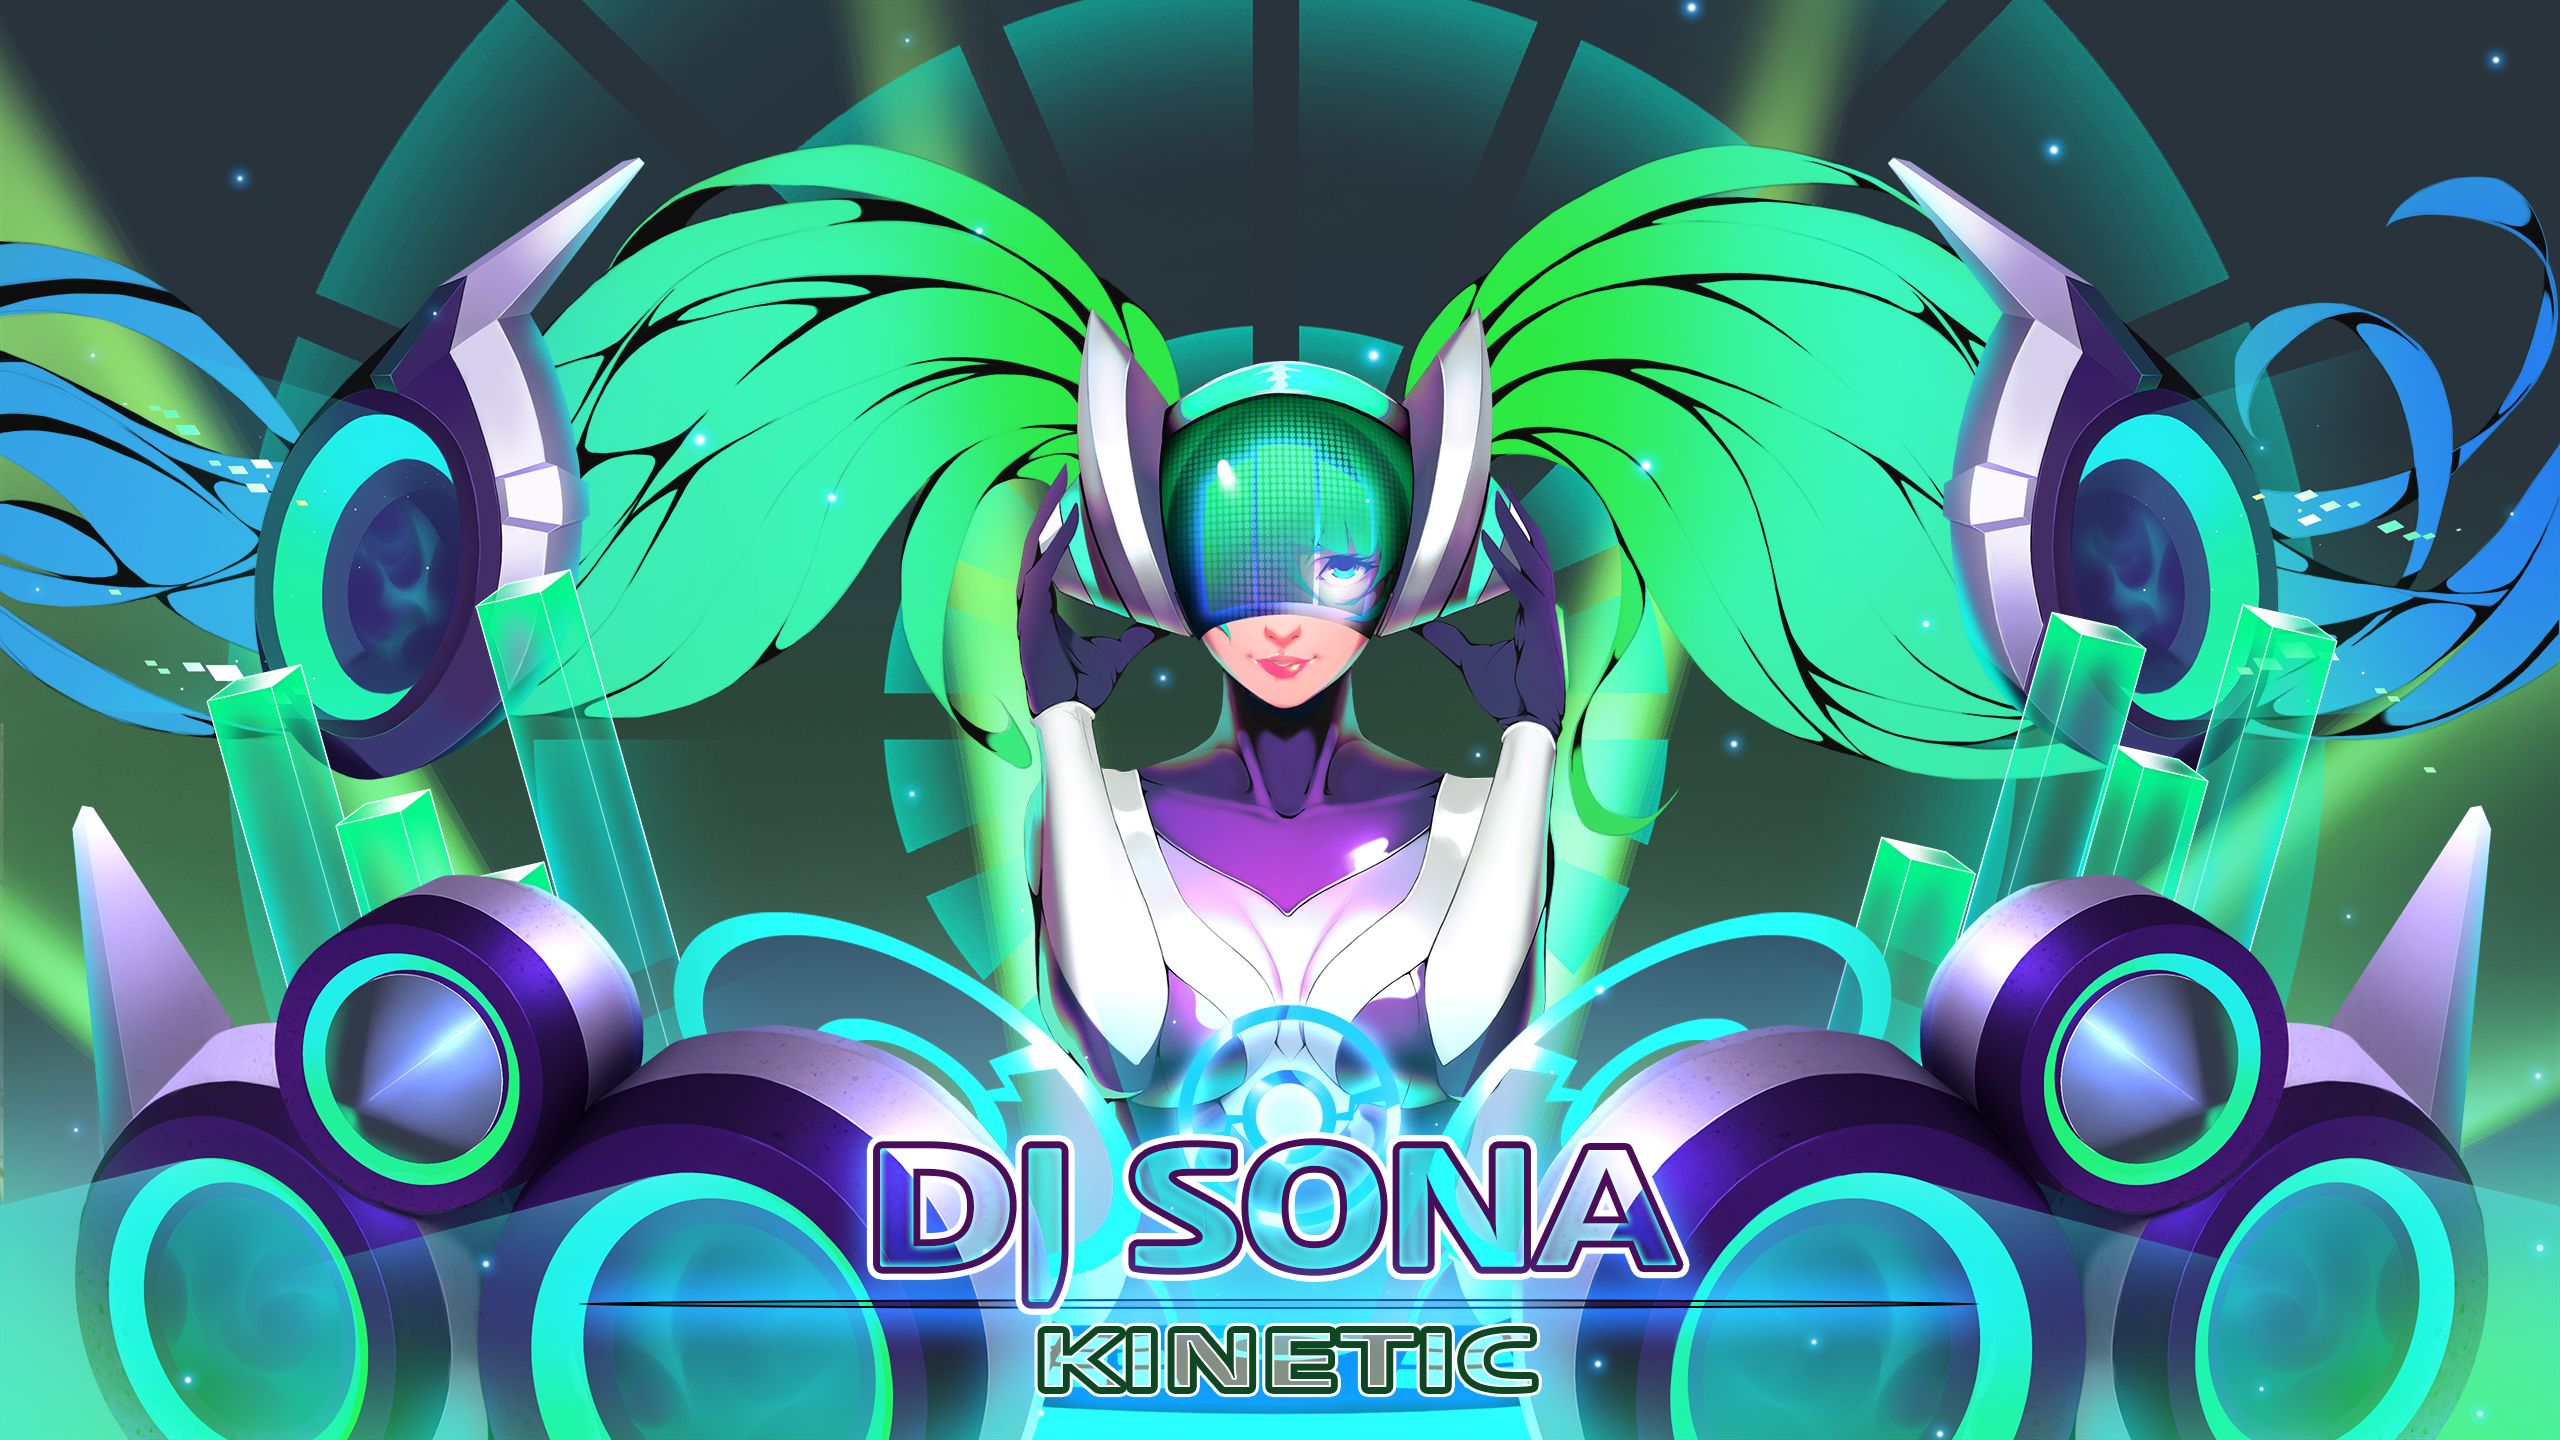 Sona League Of Legends DJ Sona .wallha.com